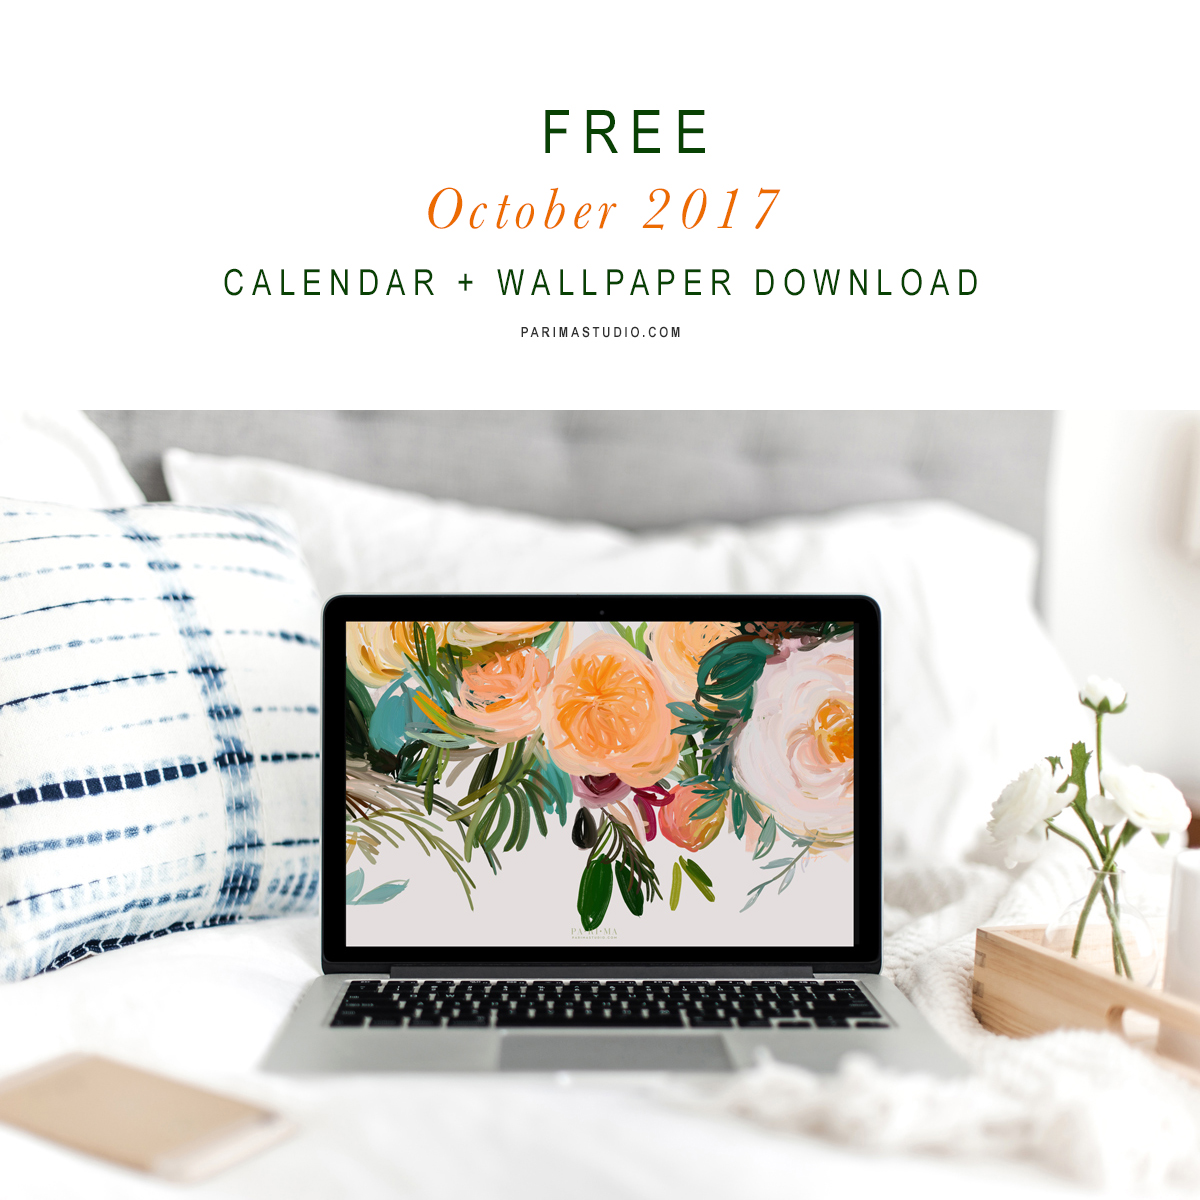 Free October 2017 Calendar and Wallpaper Download by Parima Studio